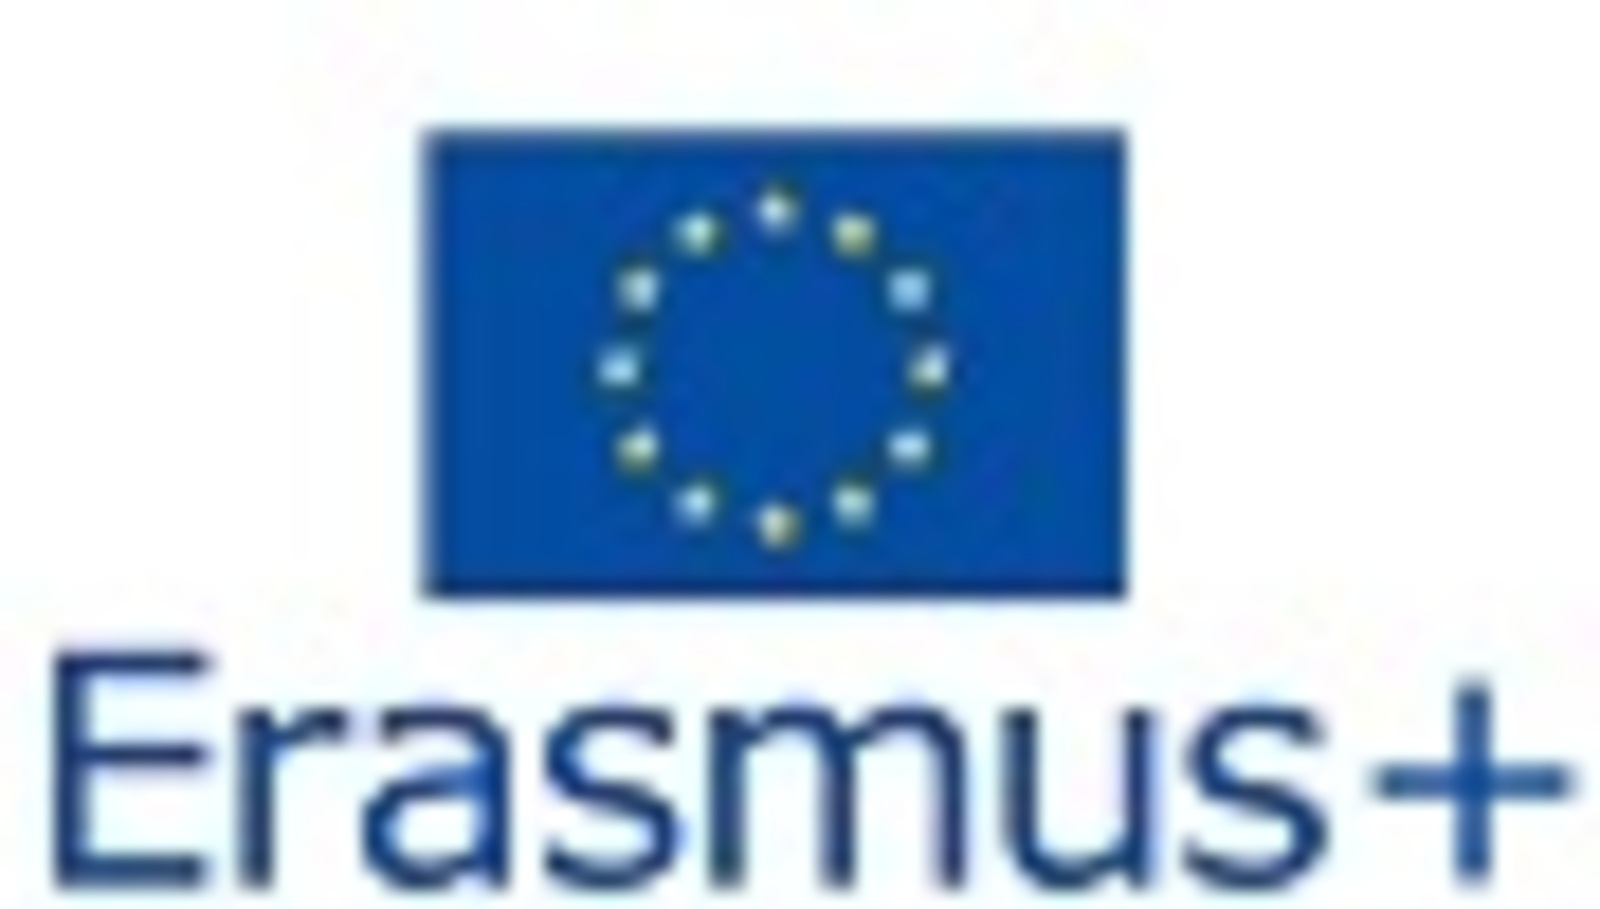 image logo de l'agence erasmus+
Lien vers: https://agence.erasmusplus.fr/